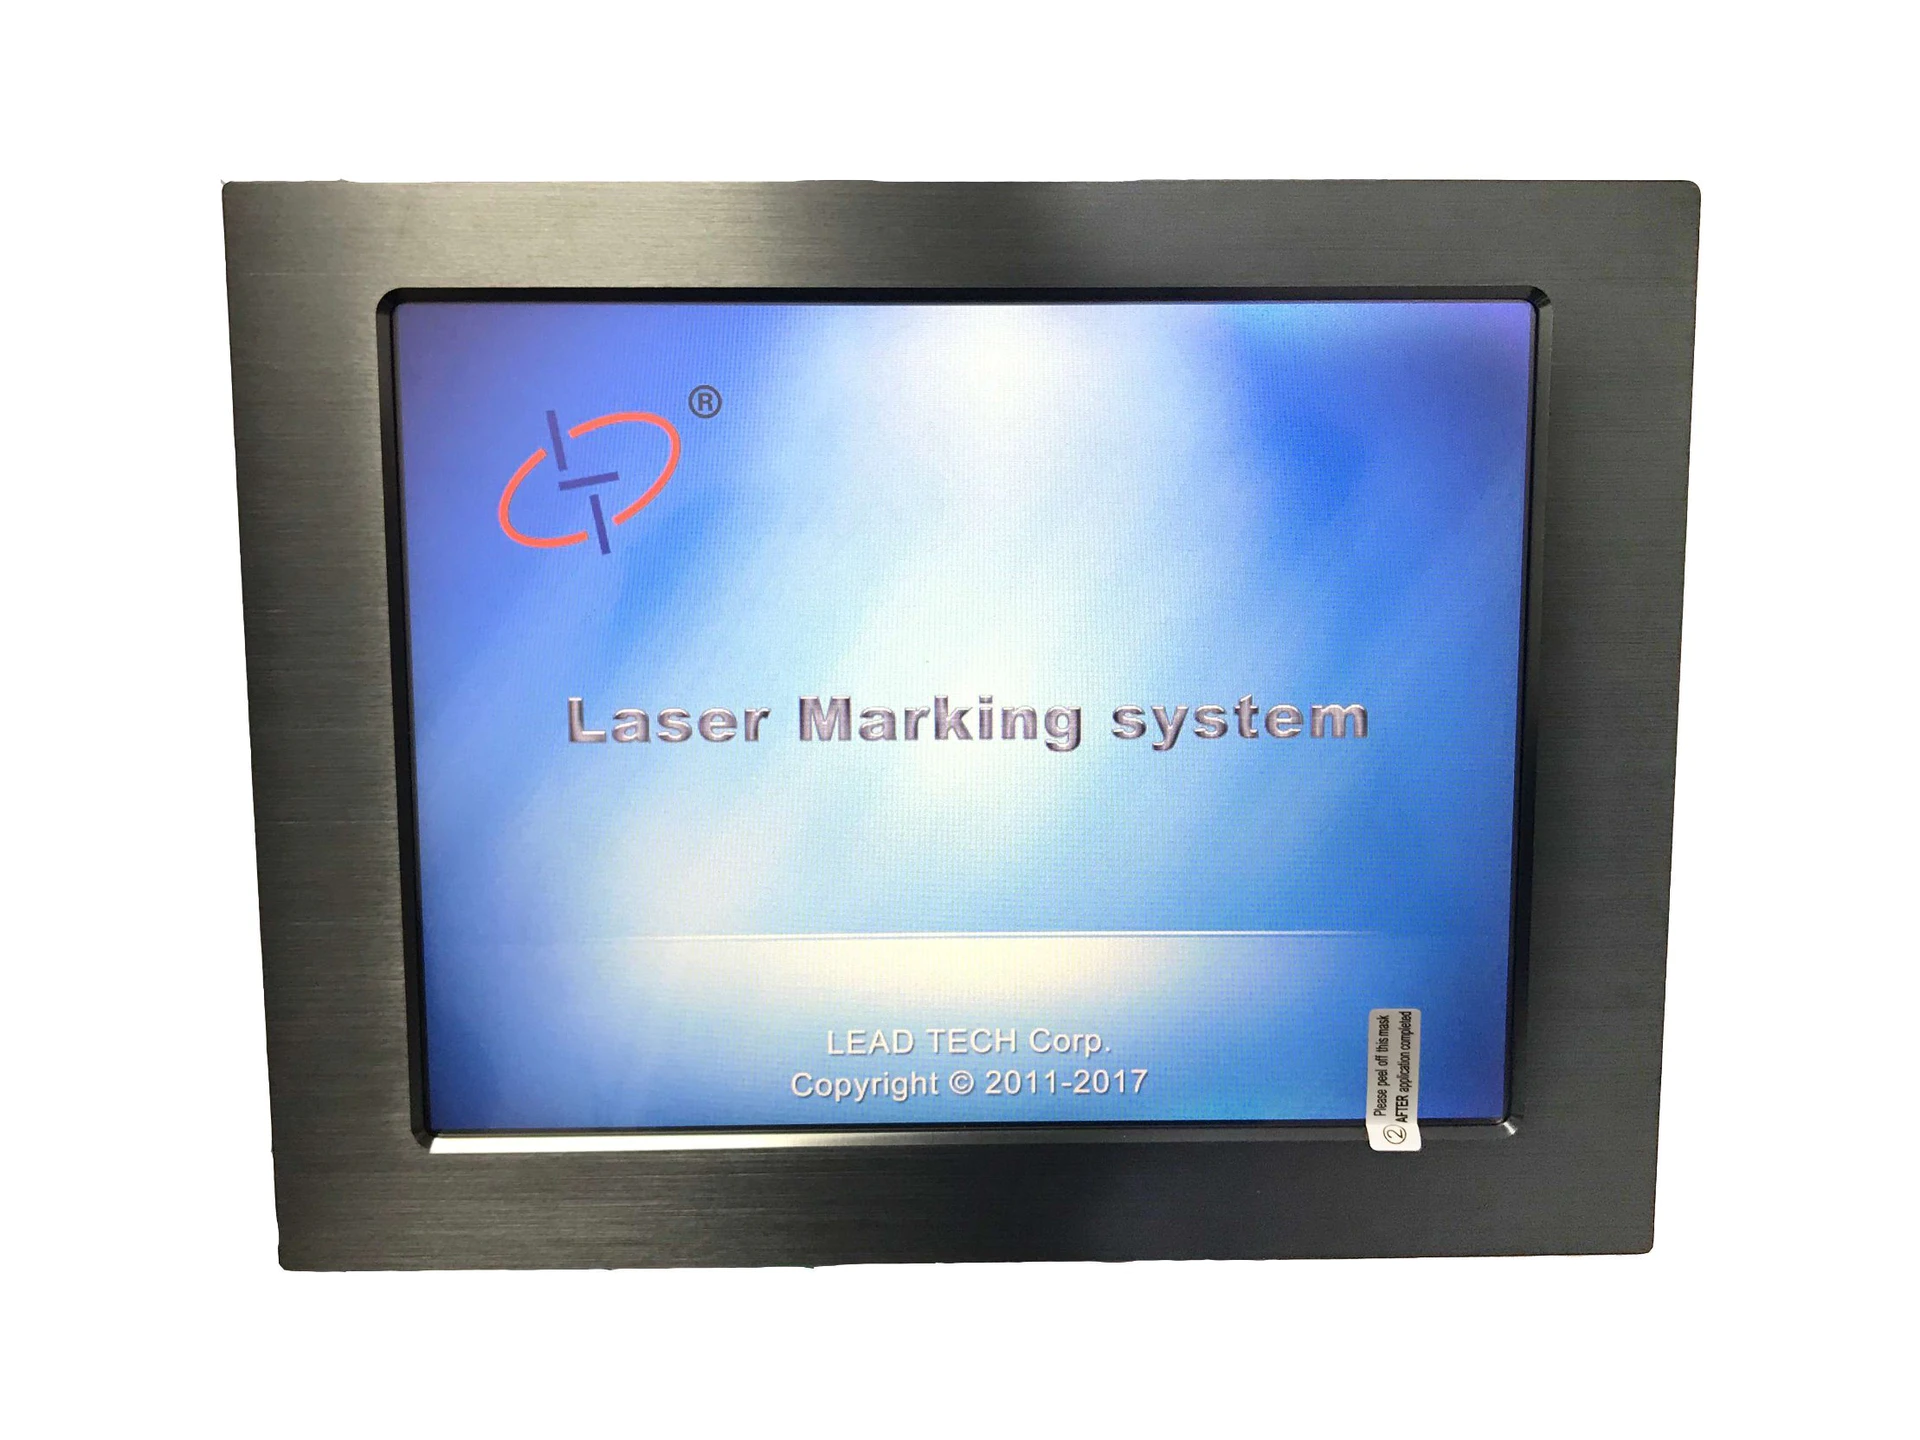 Lt8020c/Lt8030c CO2 20W/30W High Performance Digital Laser Marking Printer for PPR/PE/PVC Pipe Marking